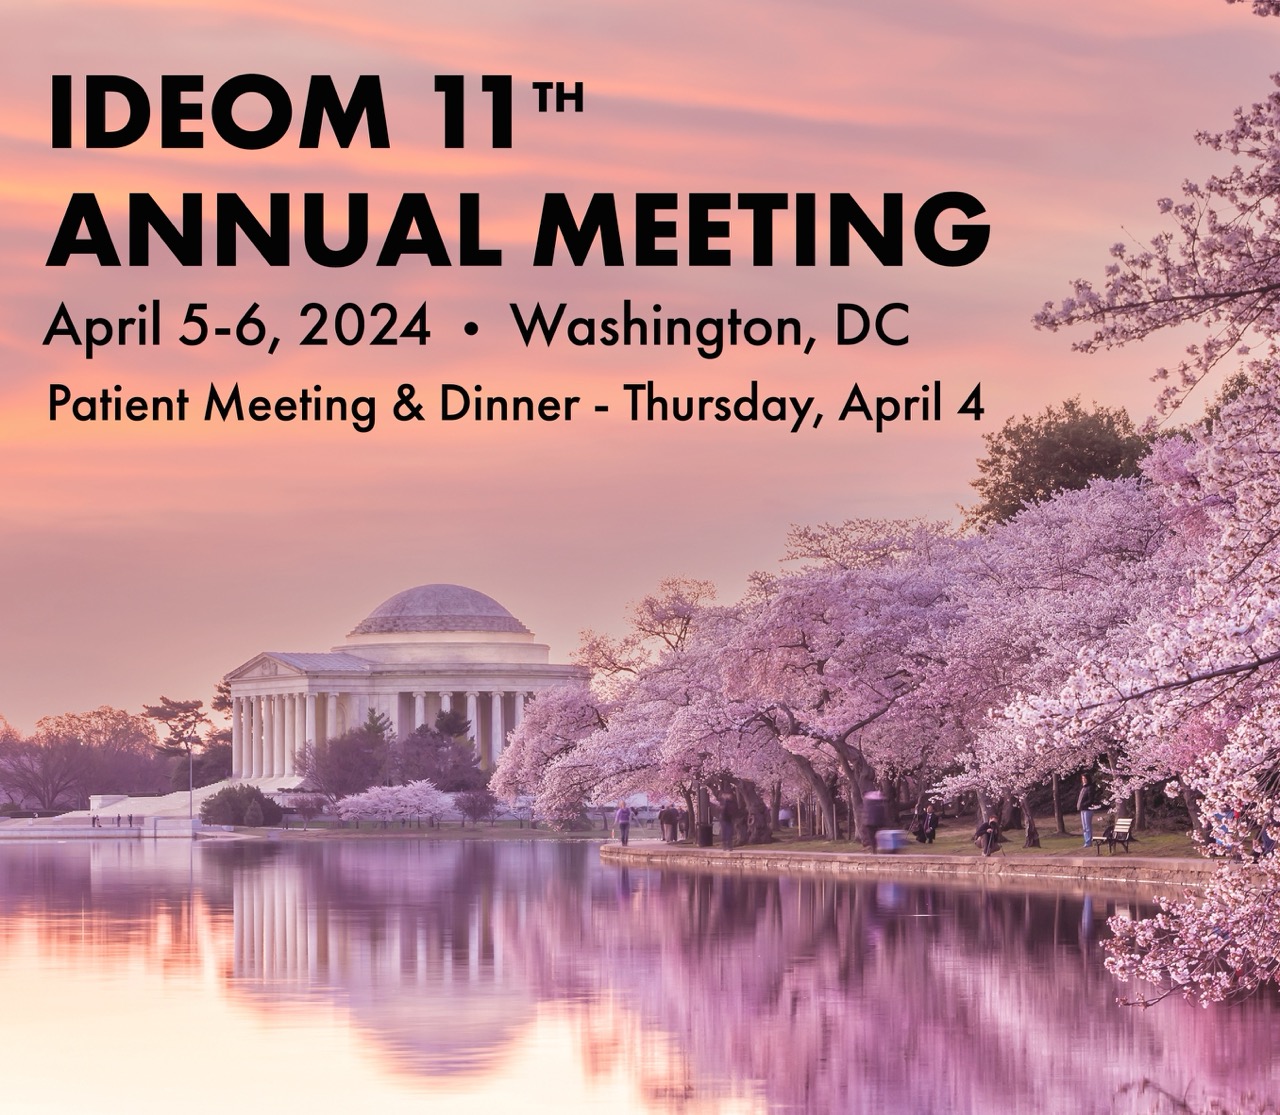 IDEOM 2024 Annual Meeting. April 4-7, 2024. Washington, DC